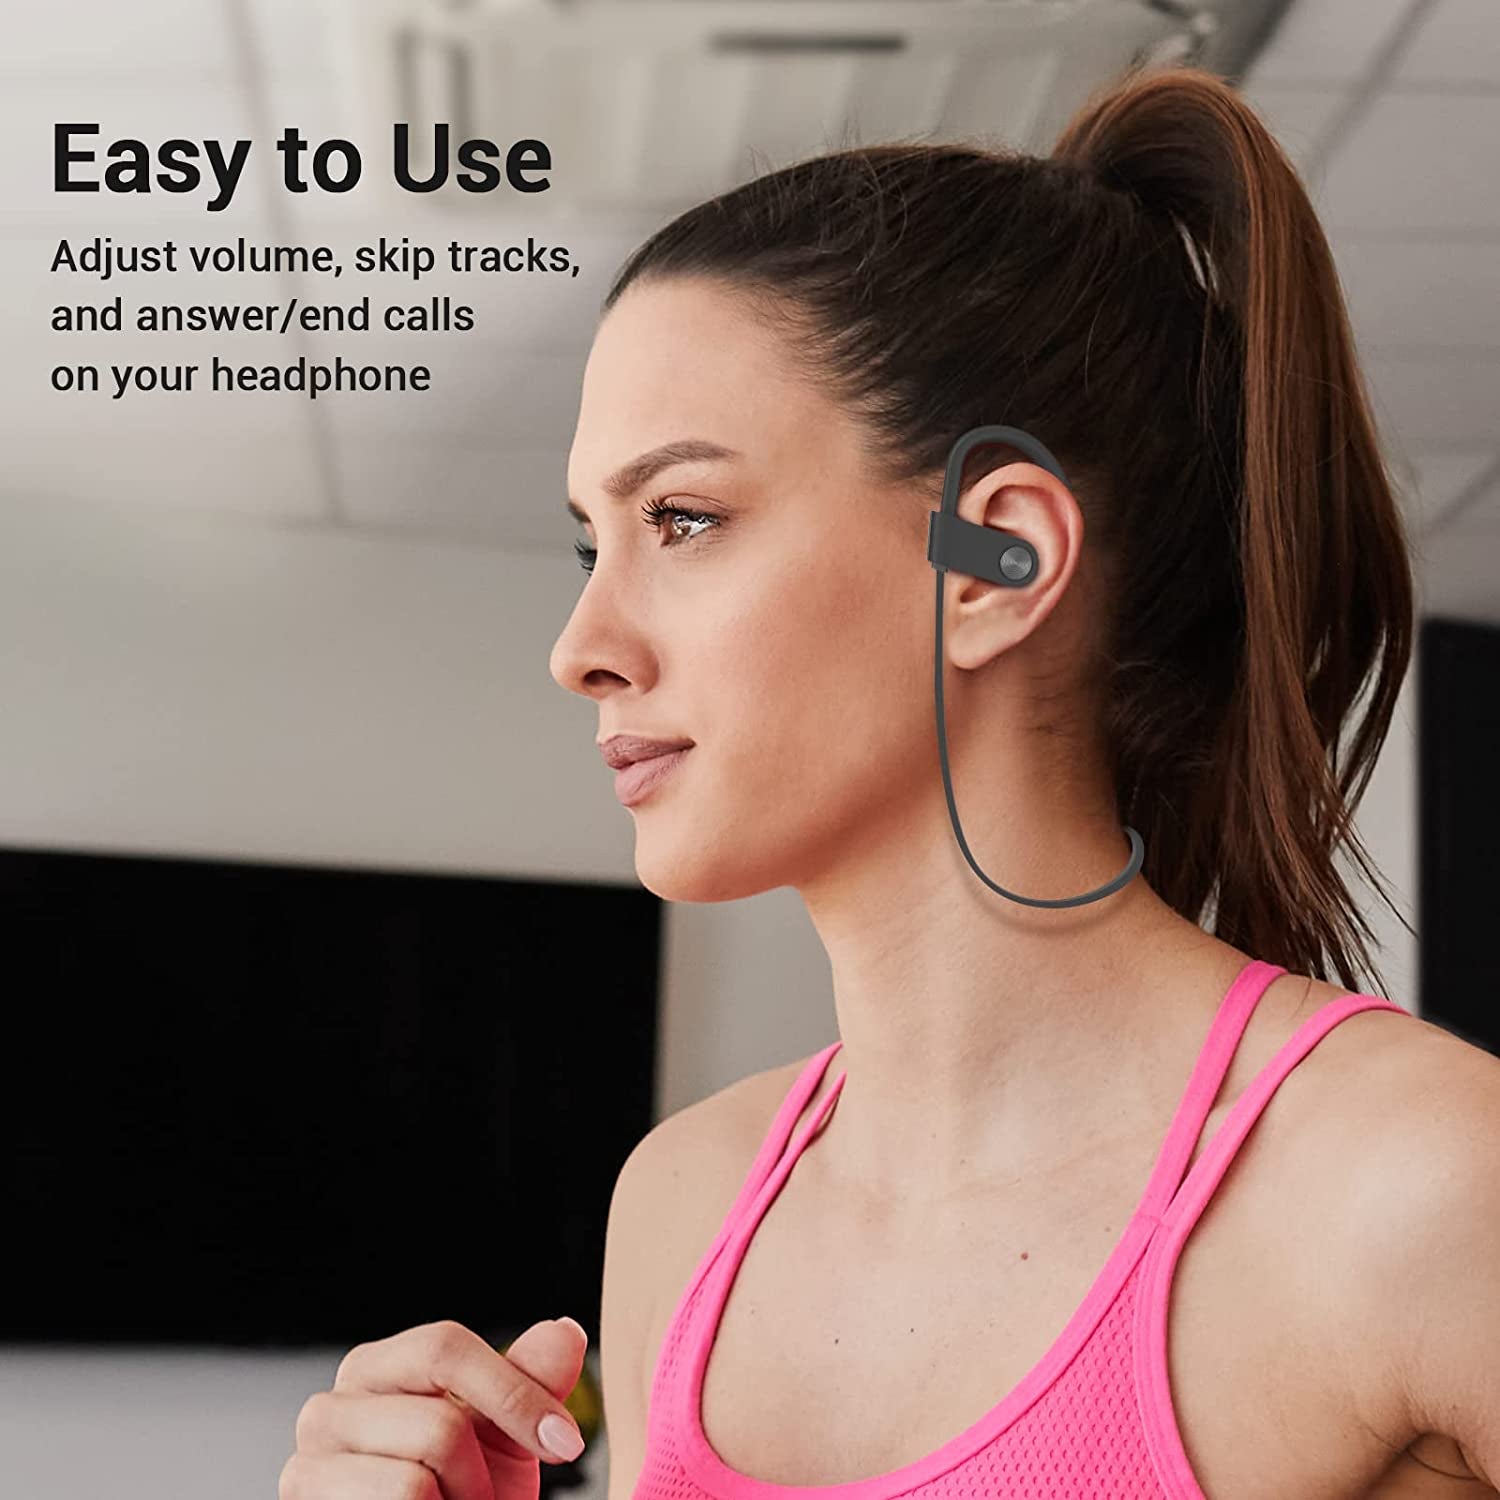 Lfutari Bluetooth Headphones, IPX7 Waterproof Wireless Sports Earbuds, up to 12 Hours Playtime, Hifi Bass Stereo Earphones with Mic, Sweatproof Headphones for Running